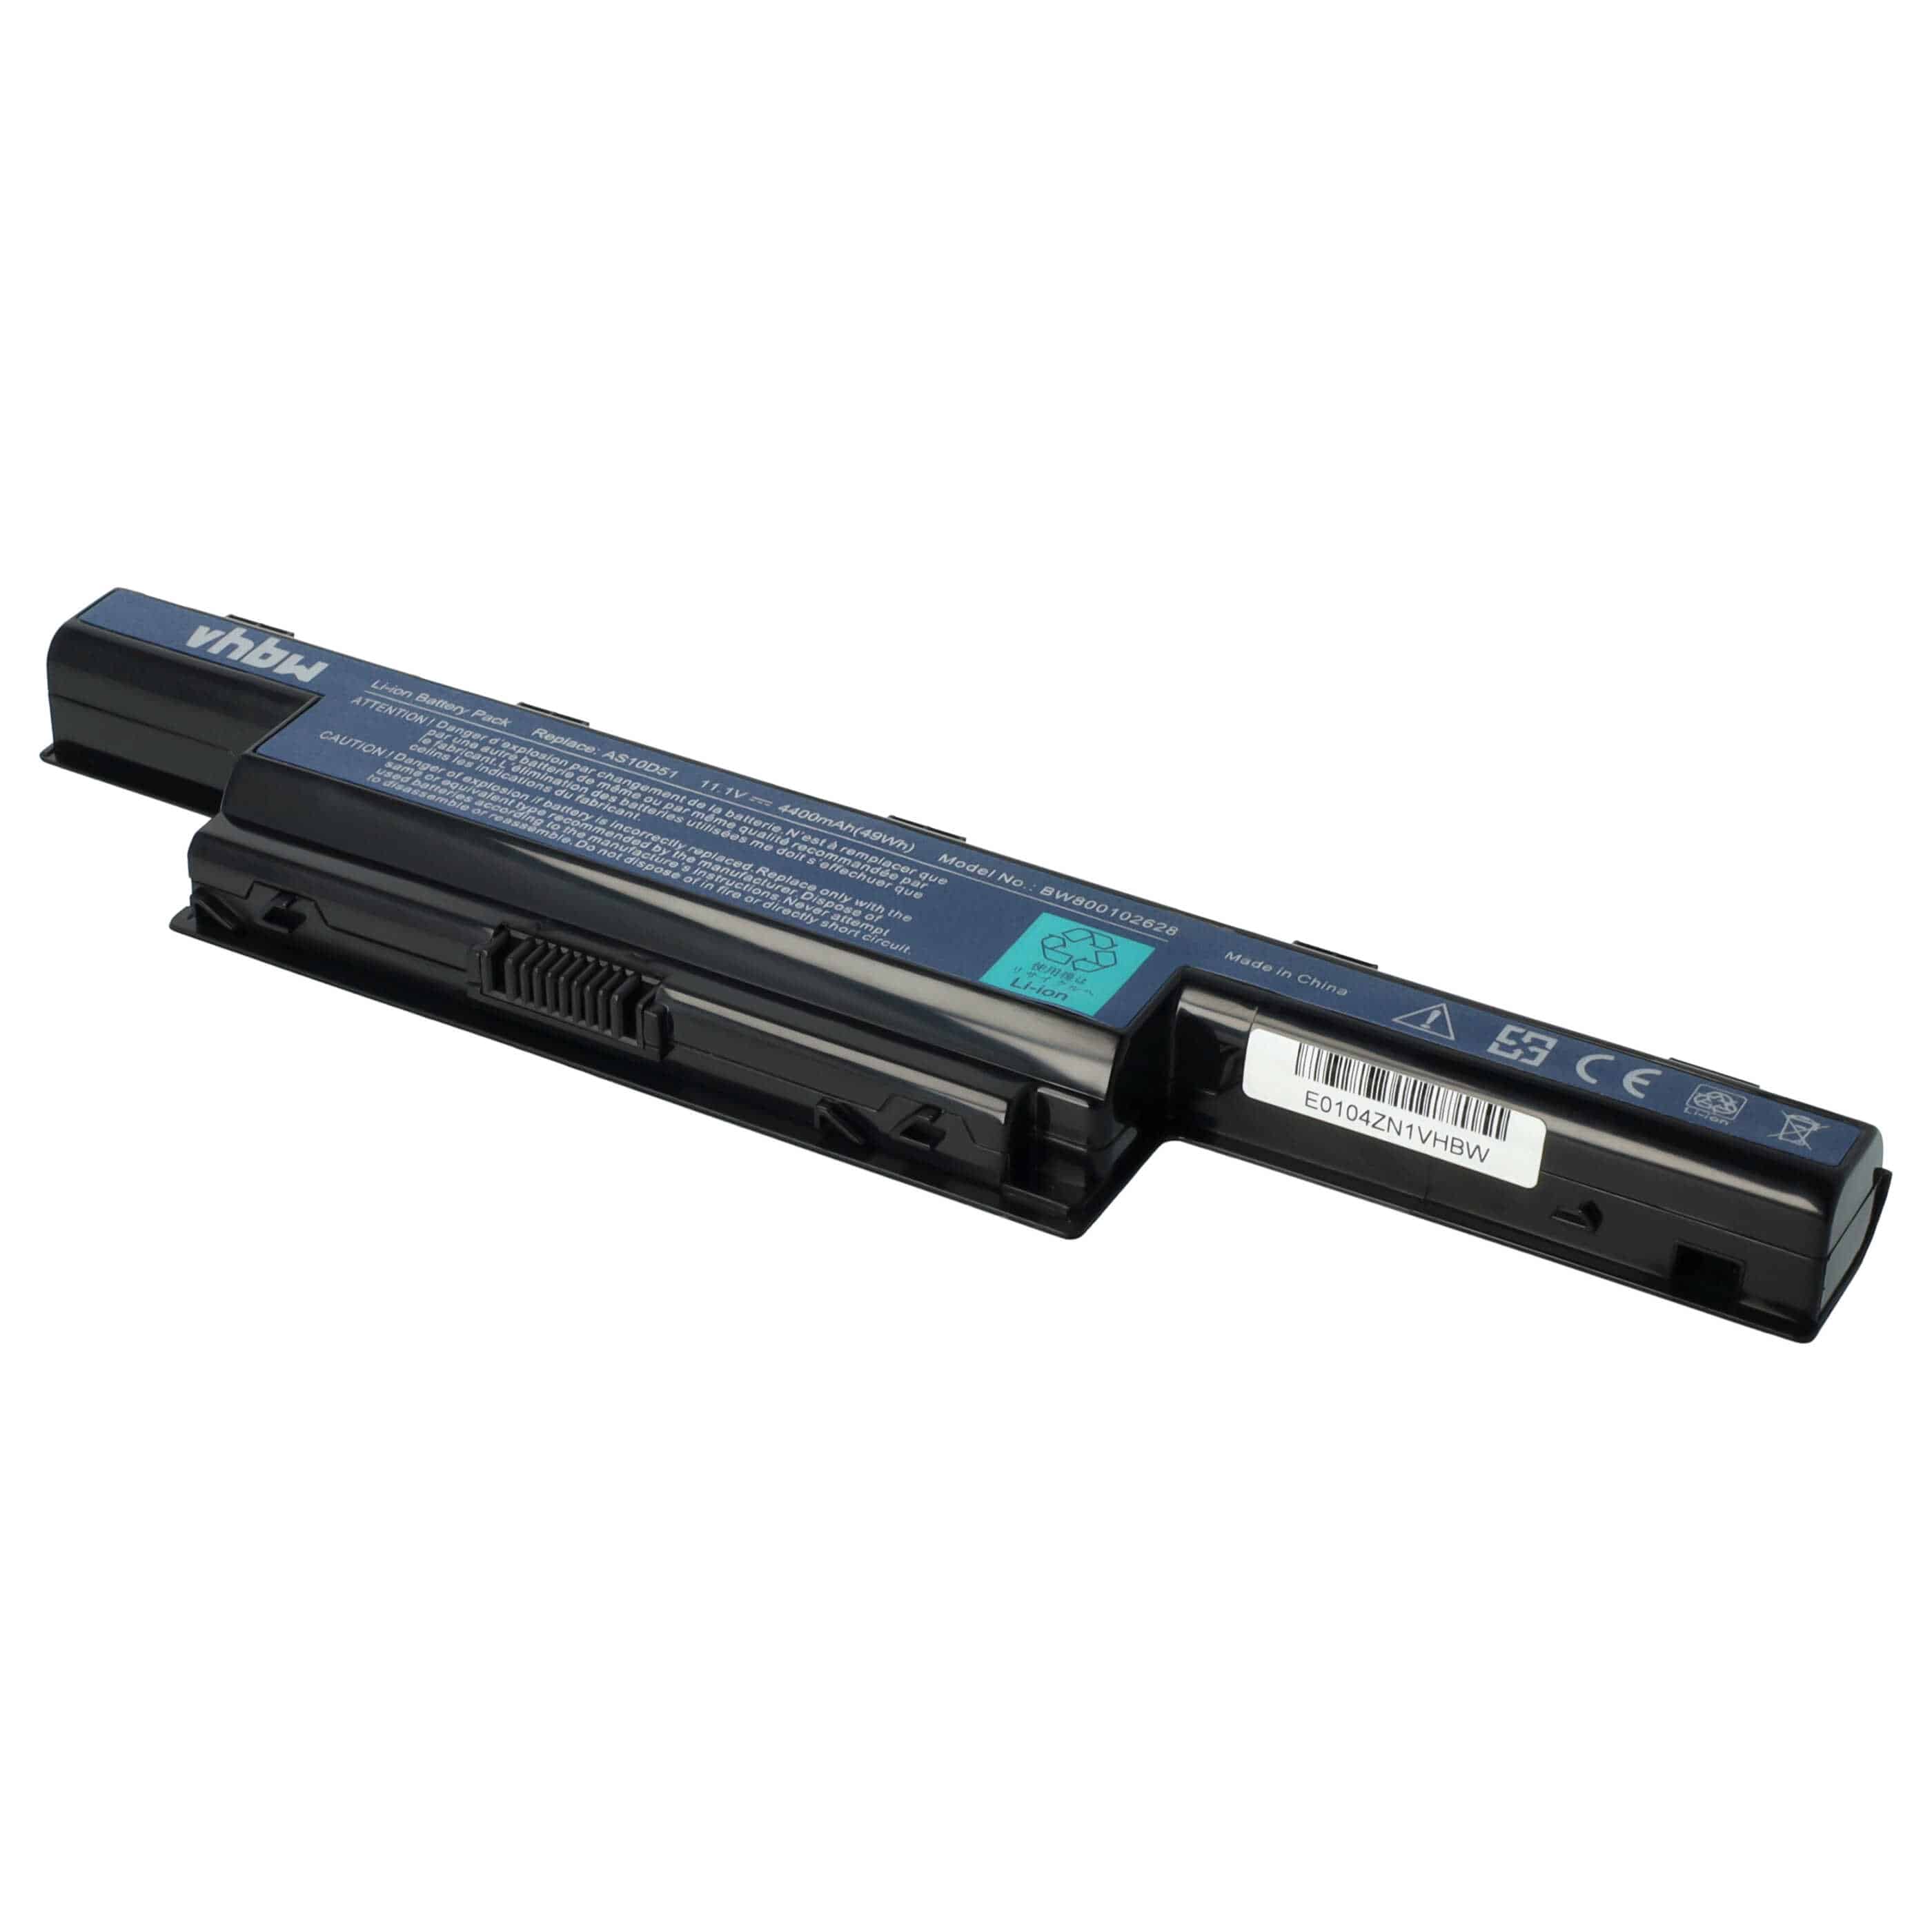 Notebook Replacement Battery for Acer Aspire 7741G, 7750G, V3-771G - 4400mAh 11.1V Li-Ion, black